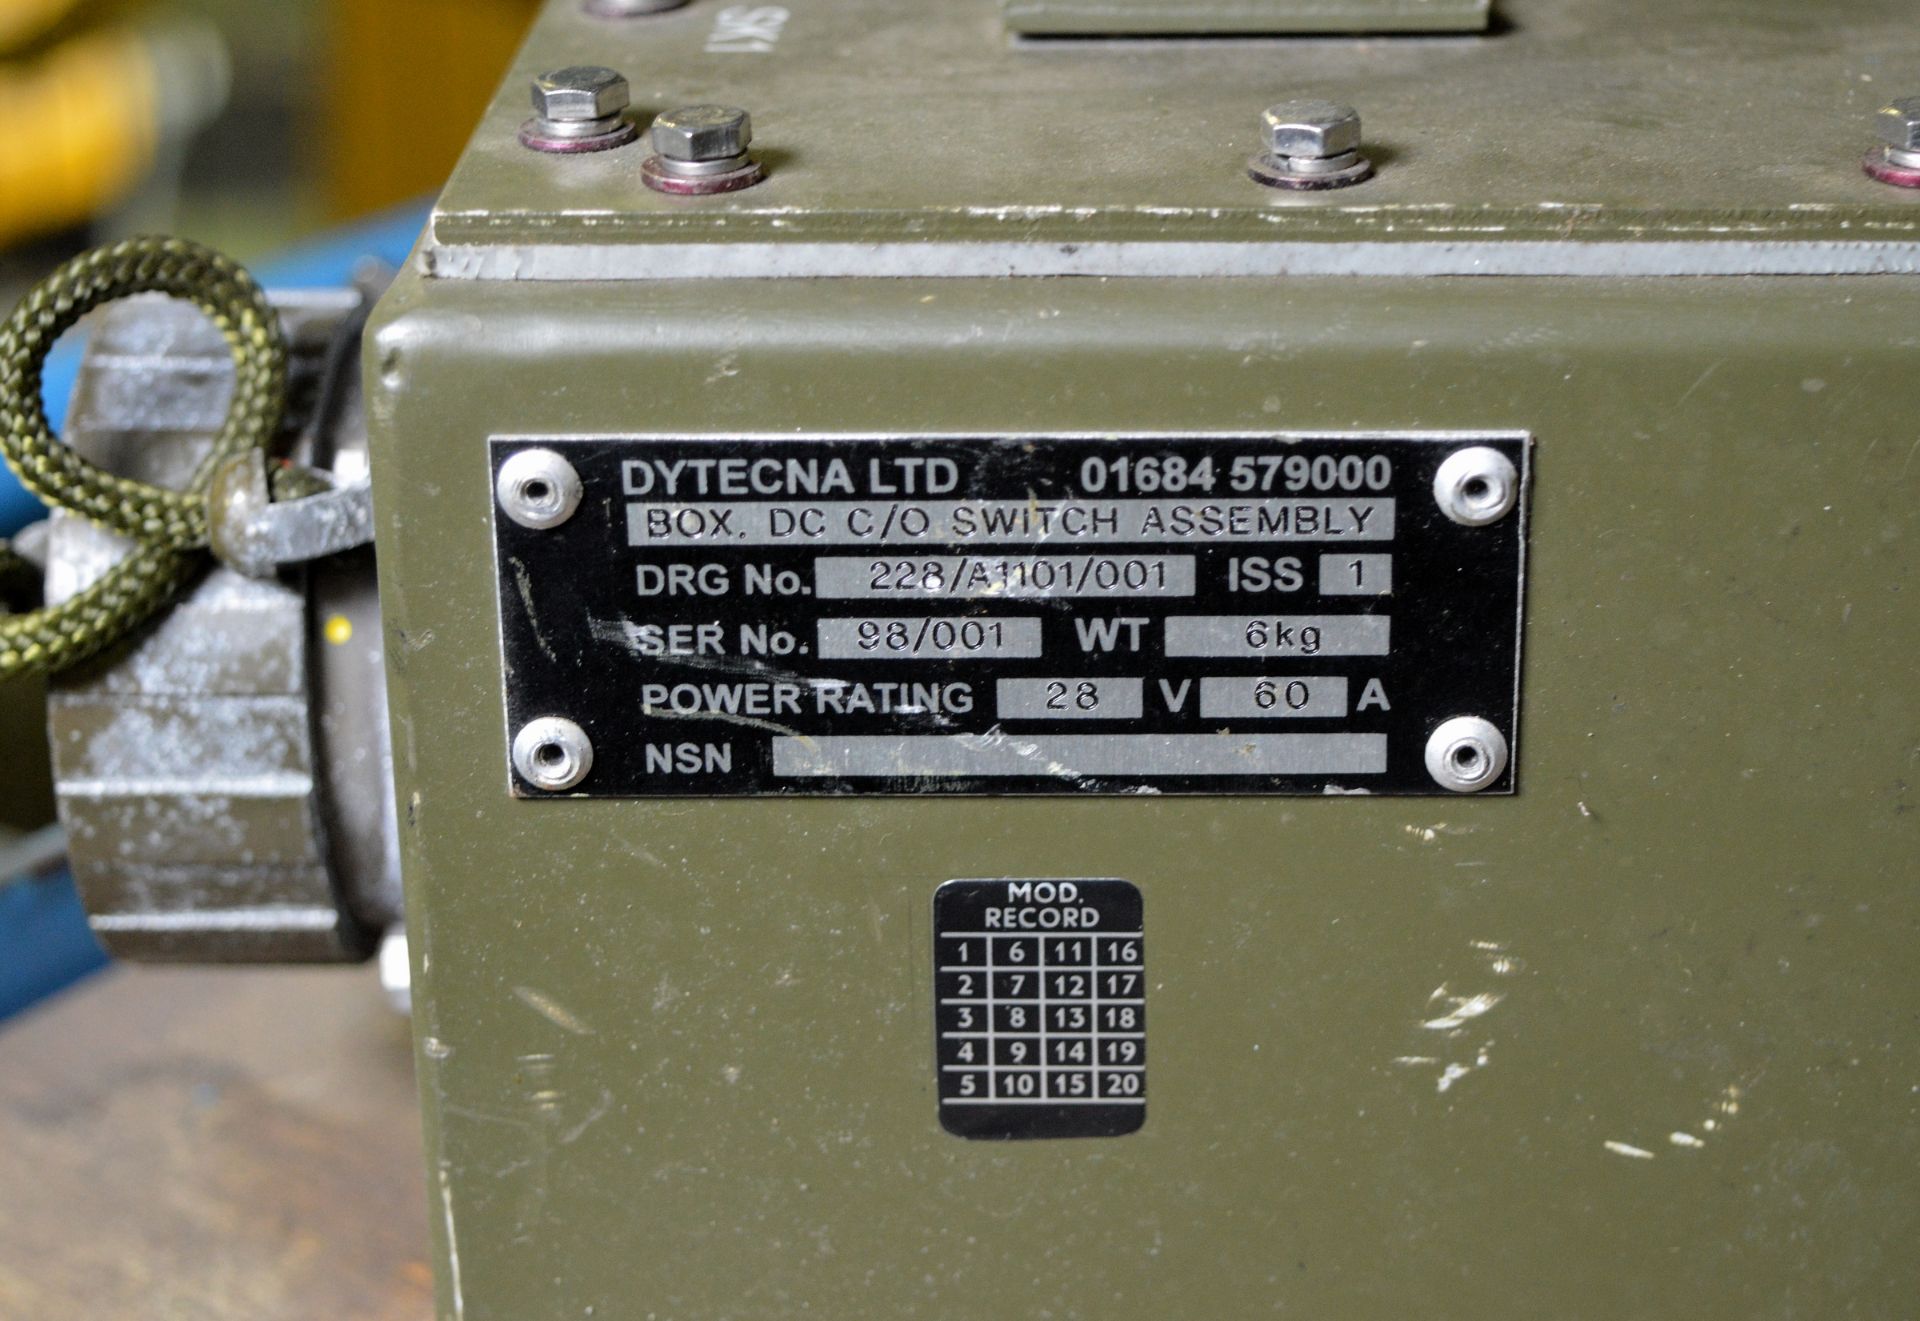 Dytecna heavy duty switch assembly - Image 3 of 3